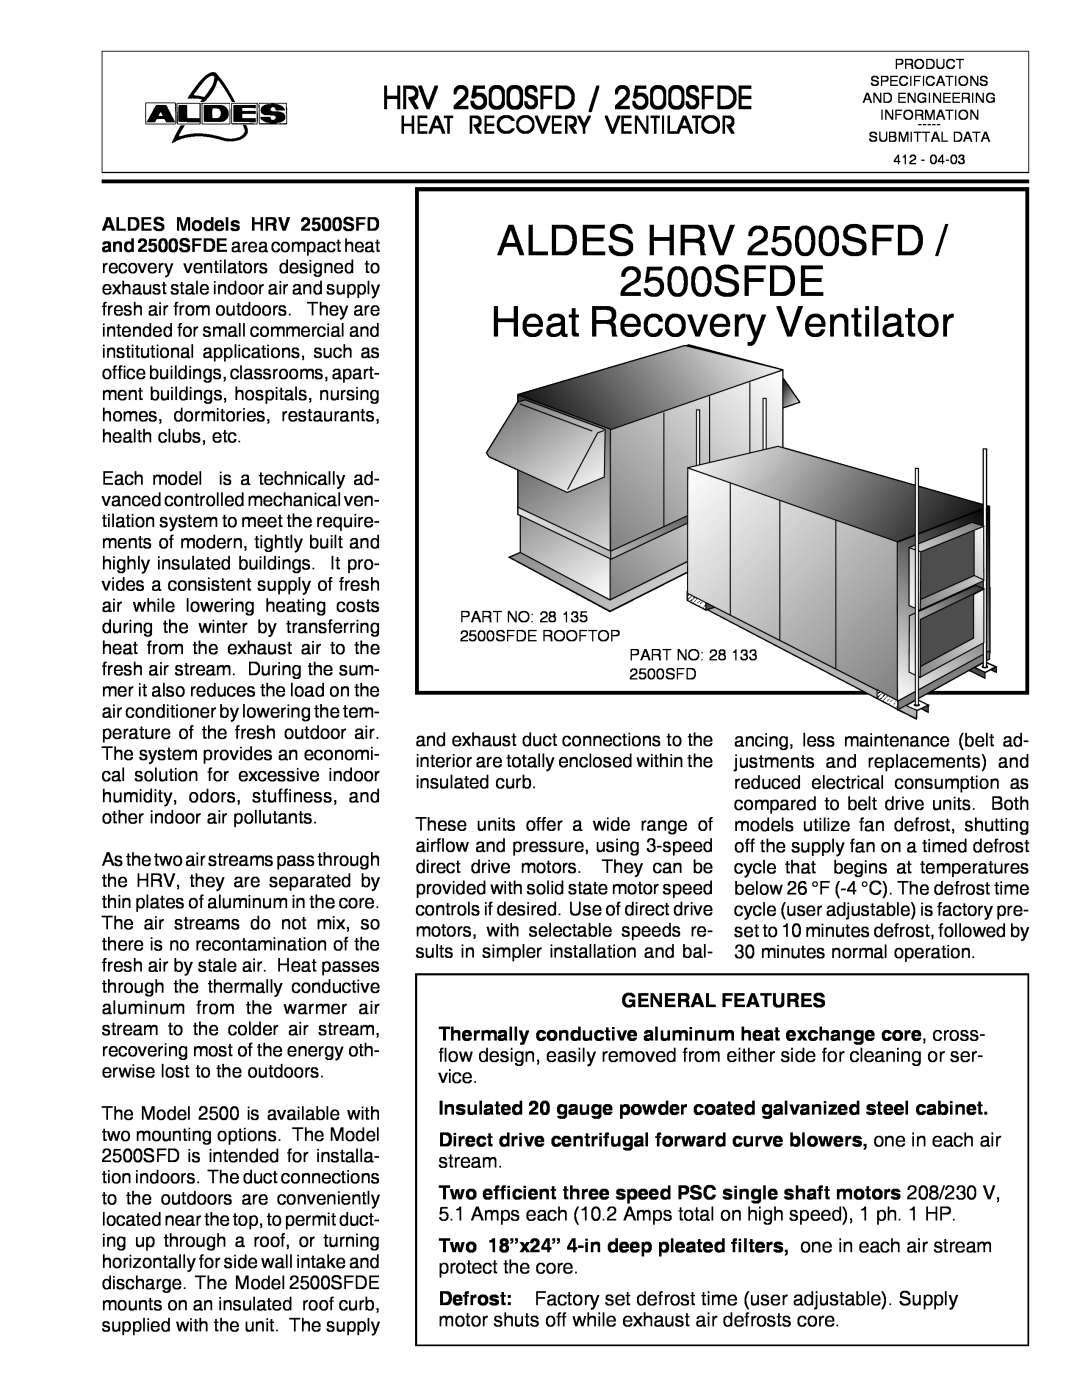 American Aldes HRV 700SDD, HRV 700SFD manual ALDES HRV 2500SFD, HRV 2500SFD / 2500SFDE, Heat Recovery Ventilator 